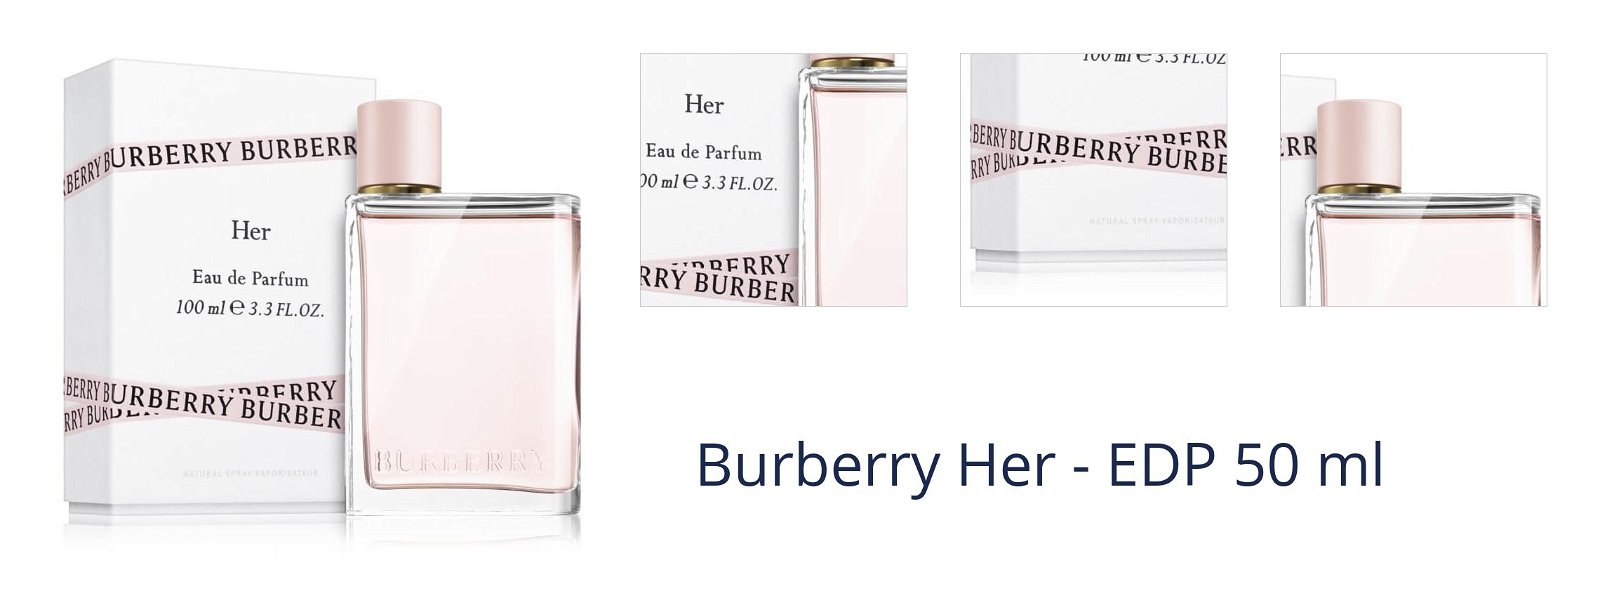 Burberry Her - EDP 50 ml 1